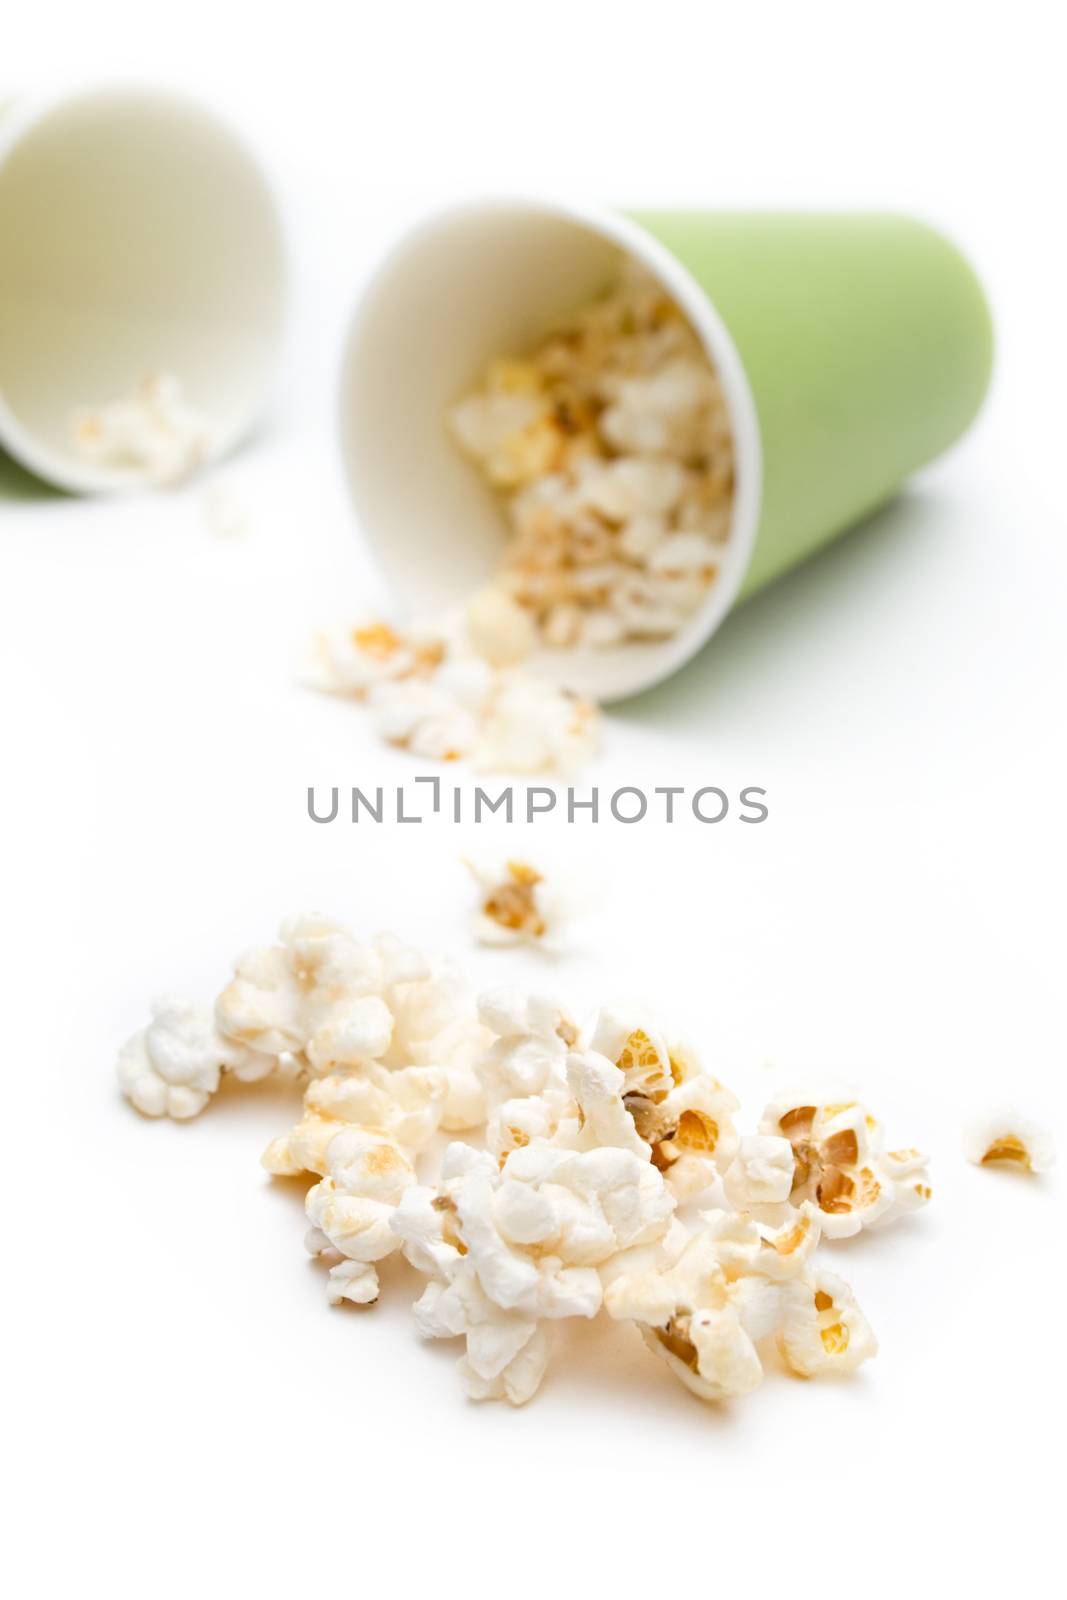 Popcorn in a green paper cup by Garsya